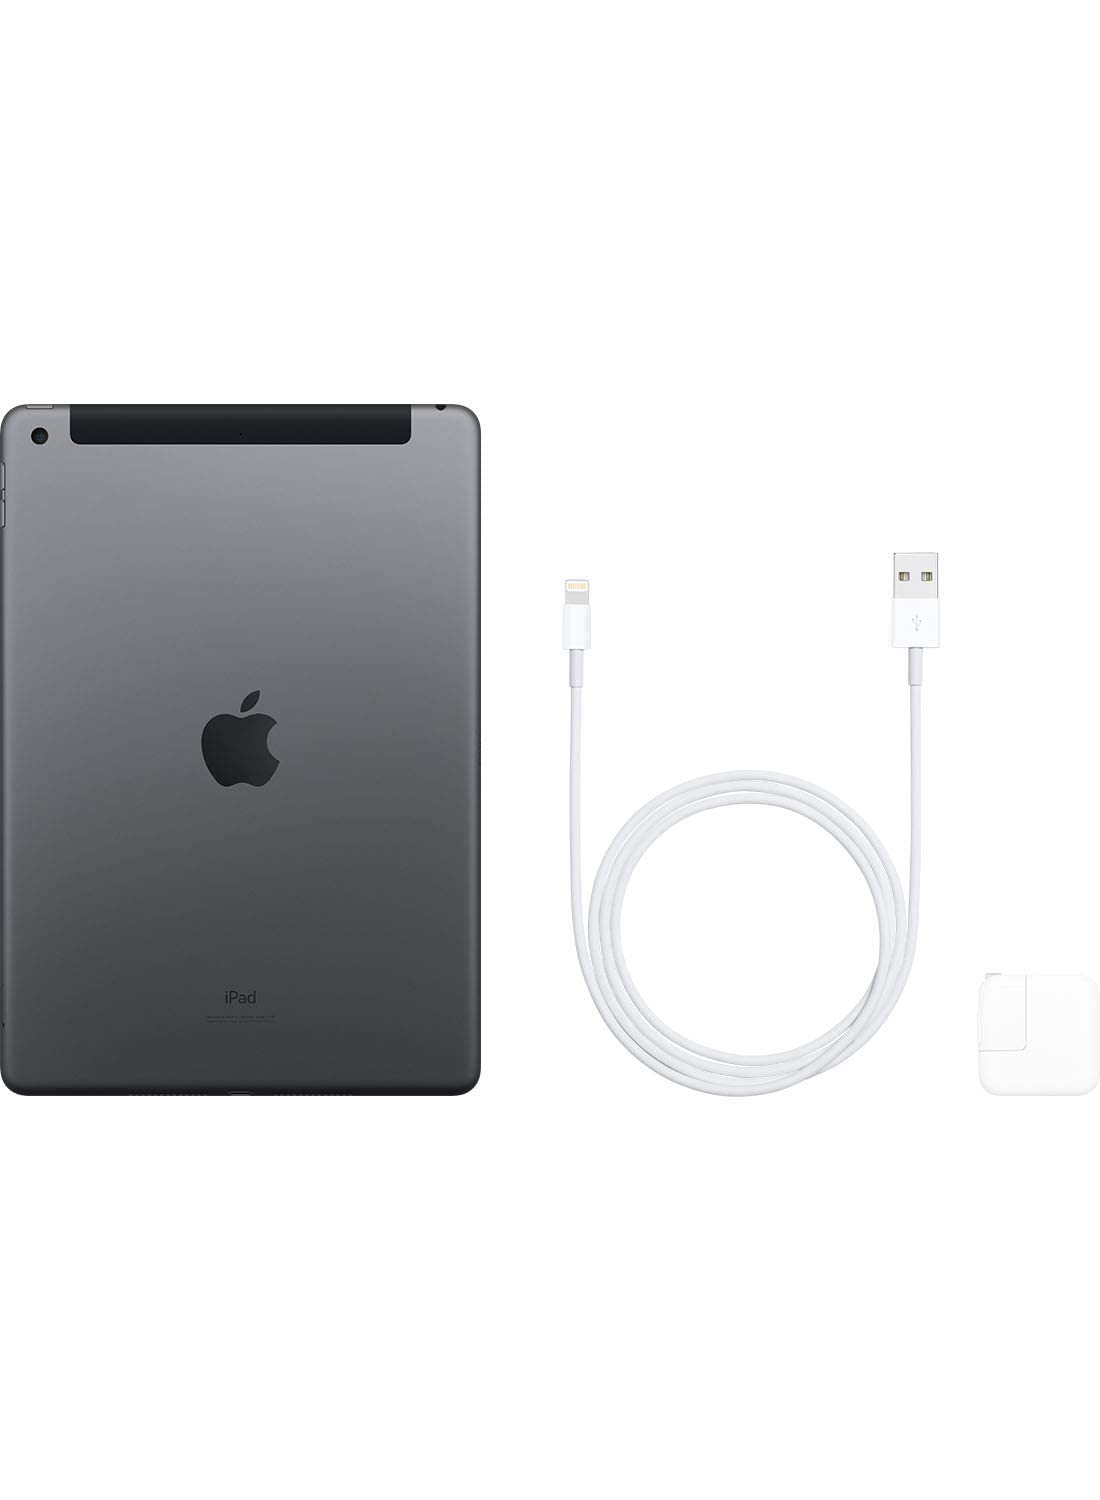 2019 Apple iPad (10.2-inch, Wi-Fi + Cellular, 128GB) - Space Gray (Renewed Premium)